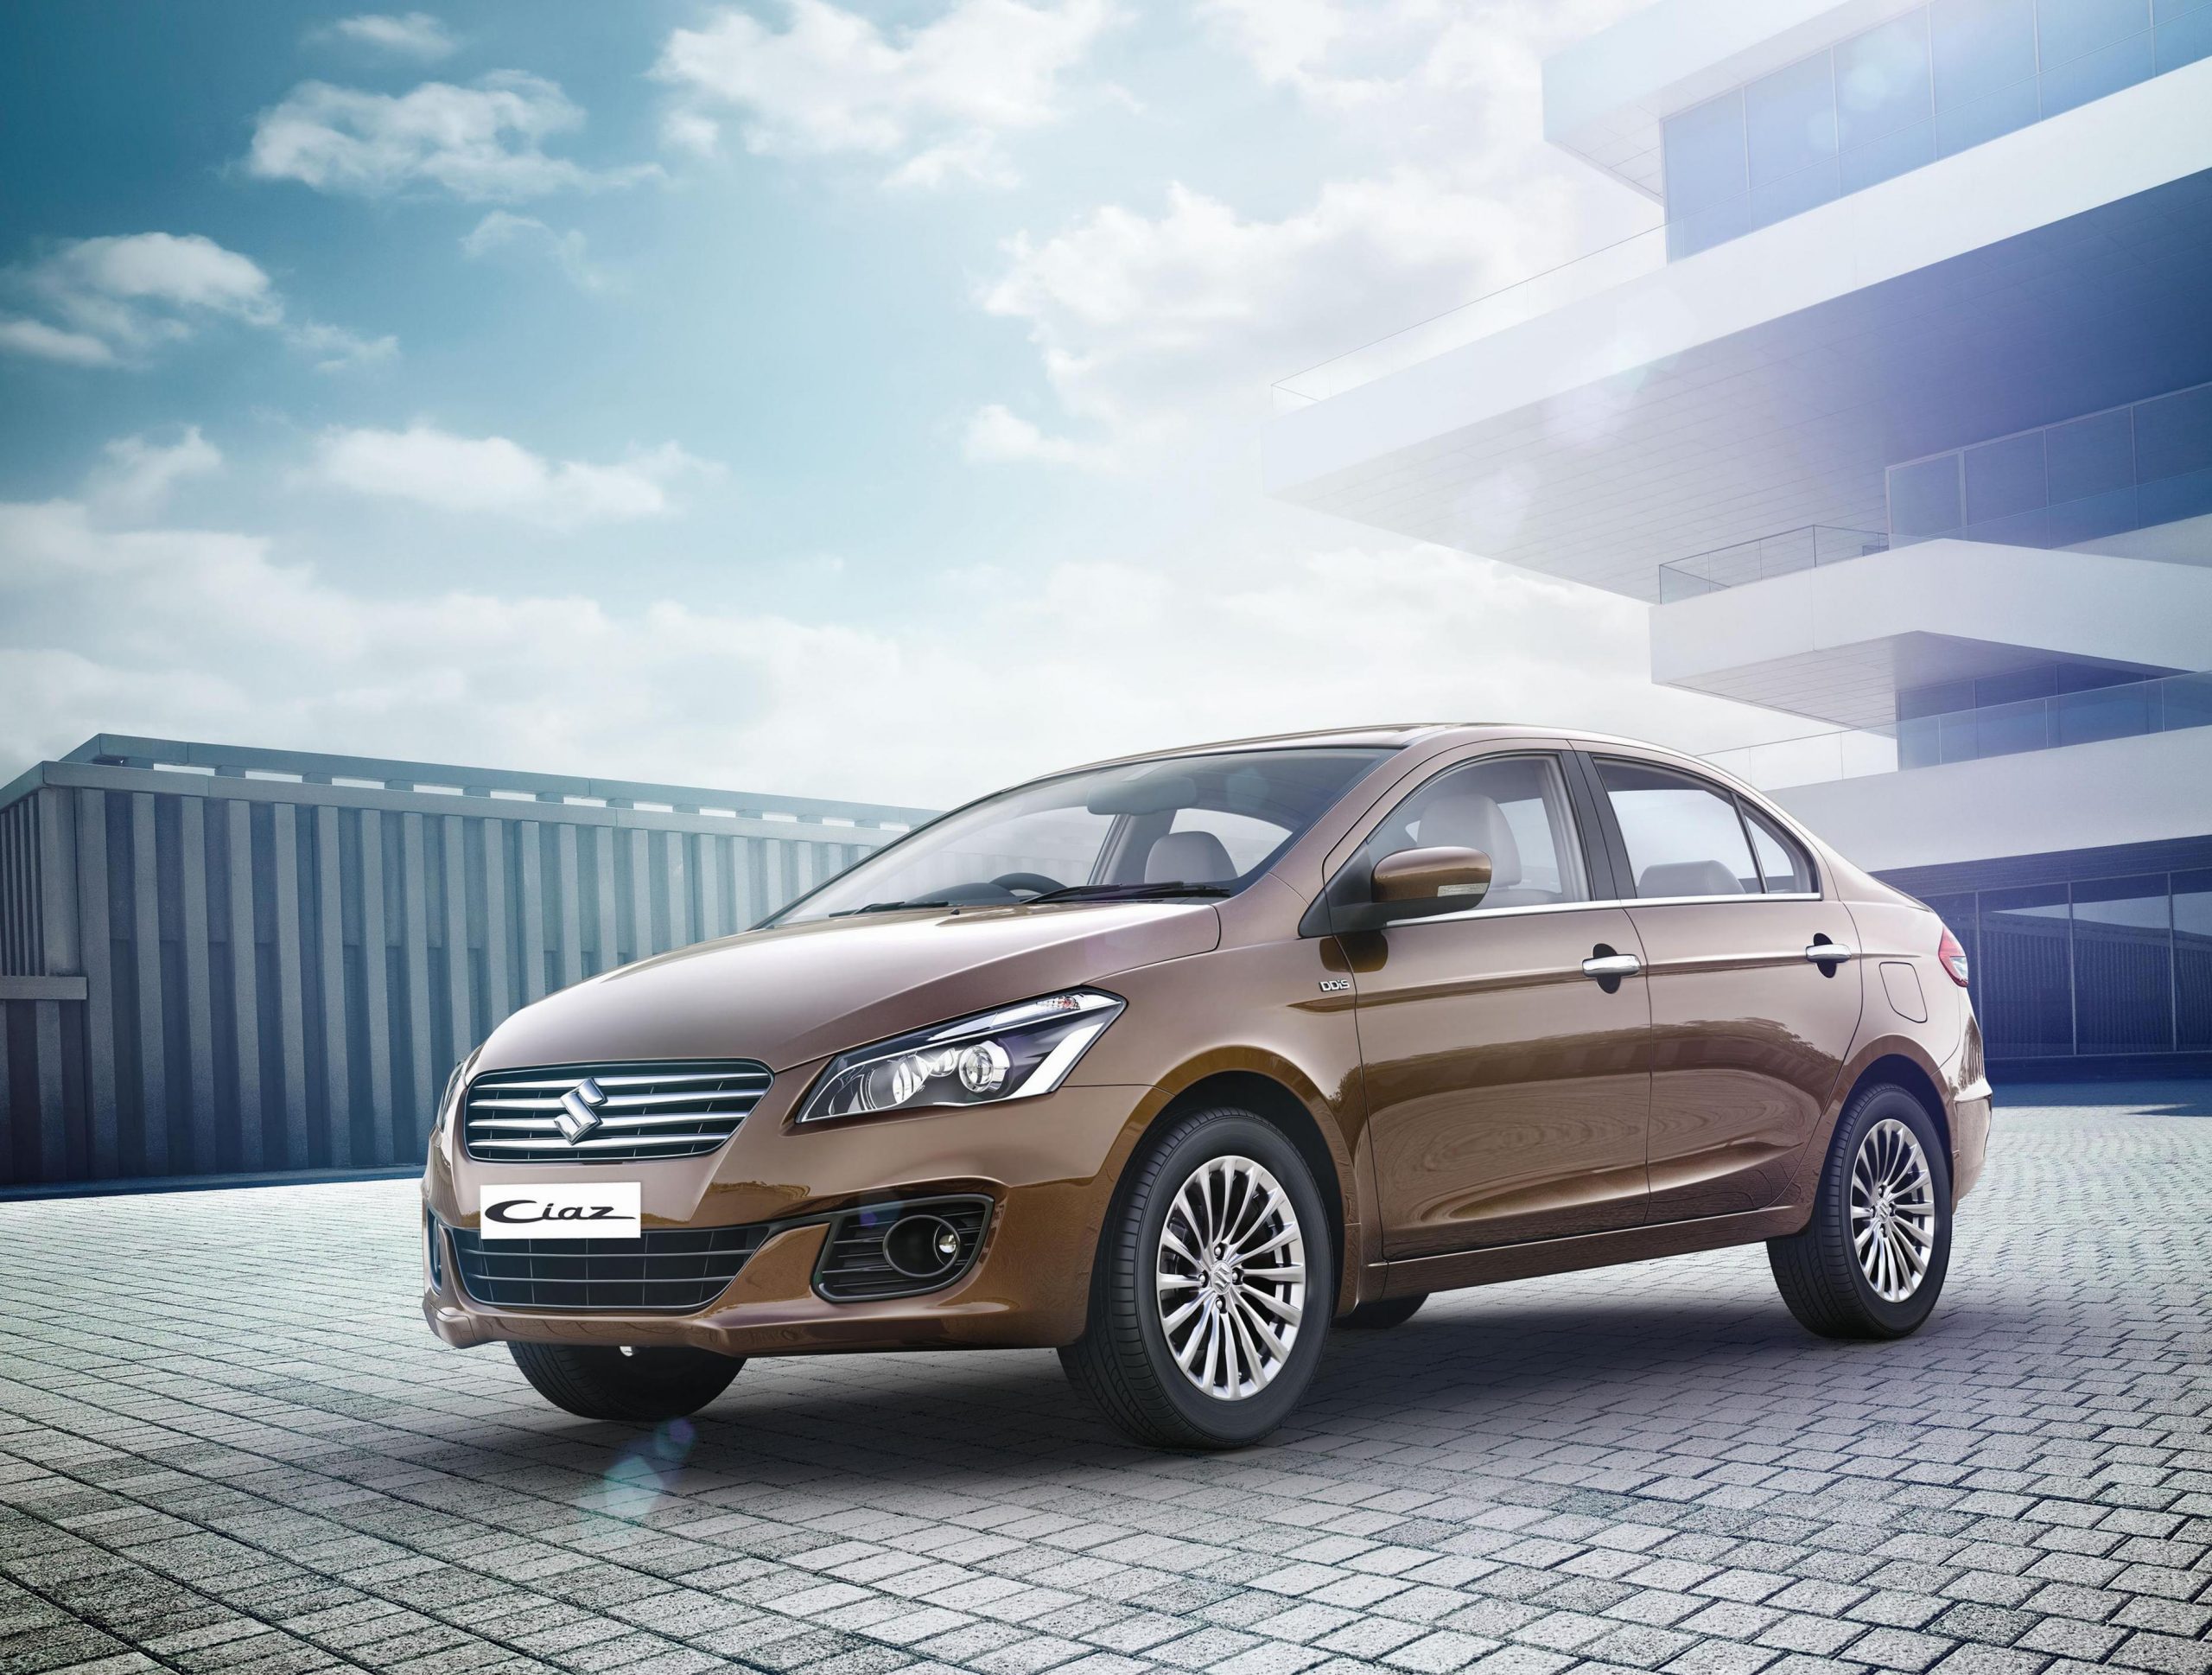 Maruti's Sedan Lineup's Fuel Efficiency and Performance